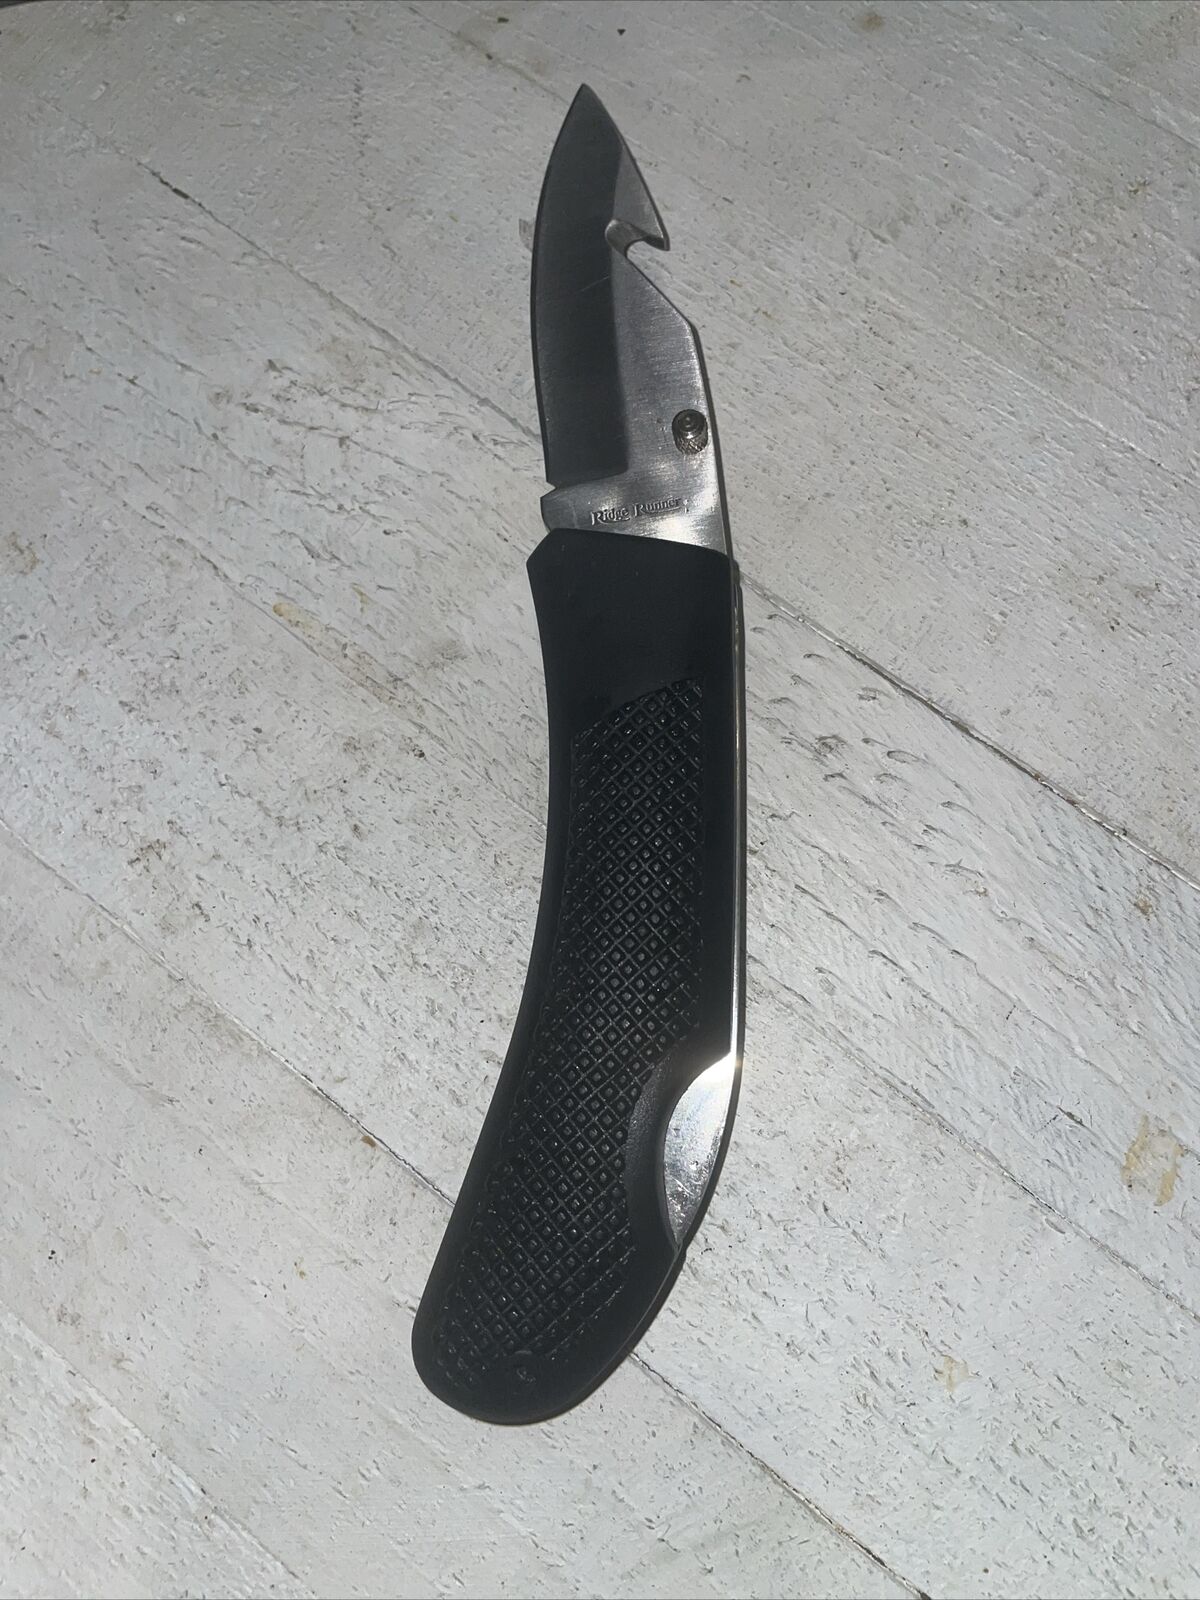 RIDGE RUNNER ~ GUT-HOOK KNIFE EASY TO GRIP RUBBERIZED HANDLE & CLASSIC FOLDING 